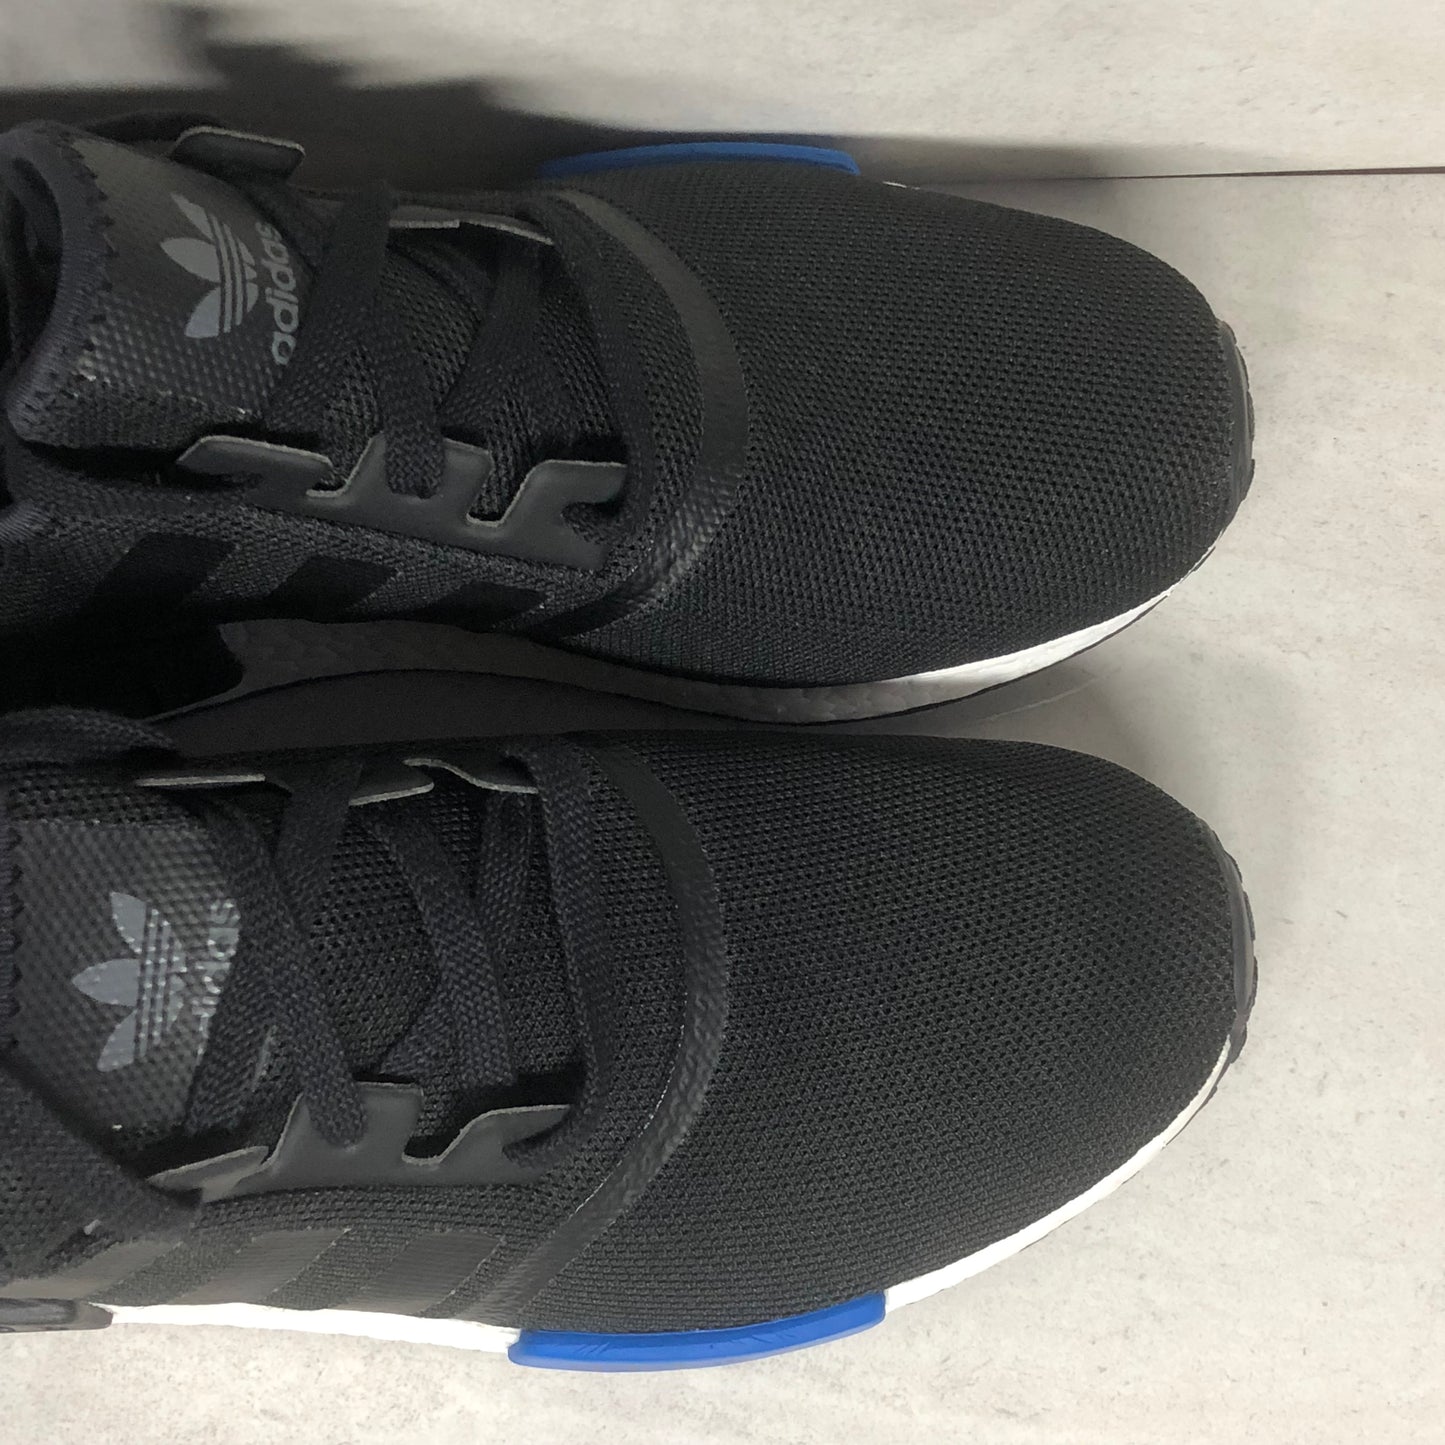 Adidas NMD R1 Tokyo Size 13 Black/Blue S79162